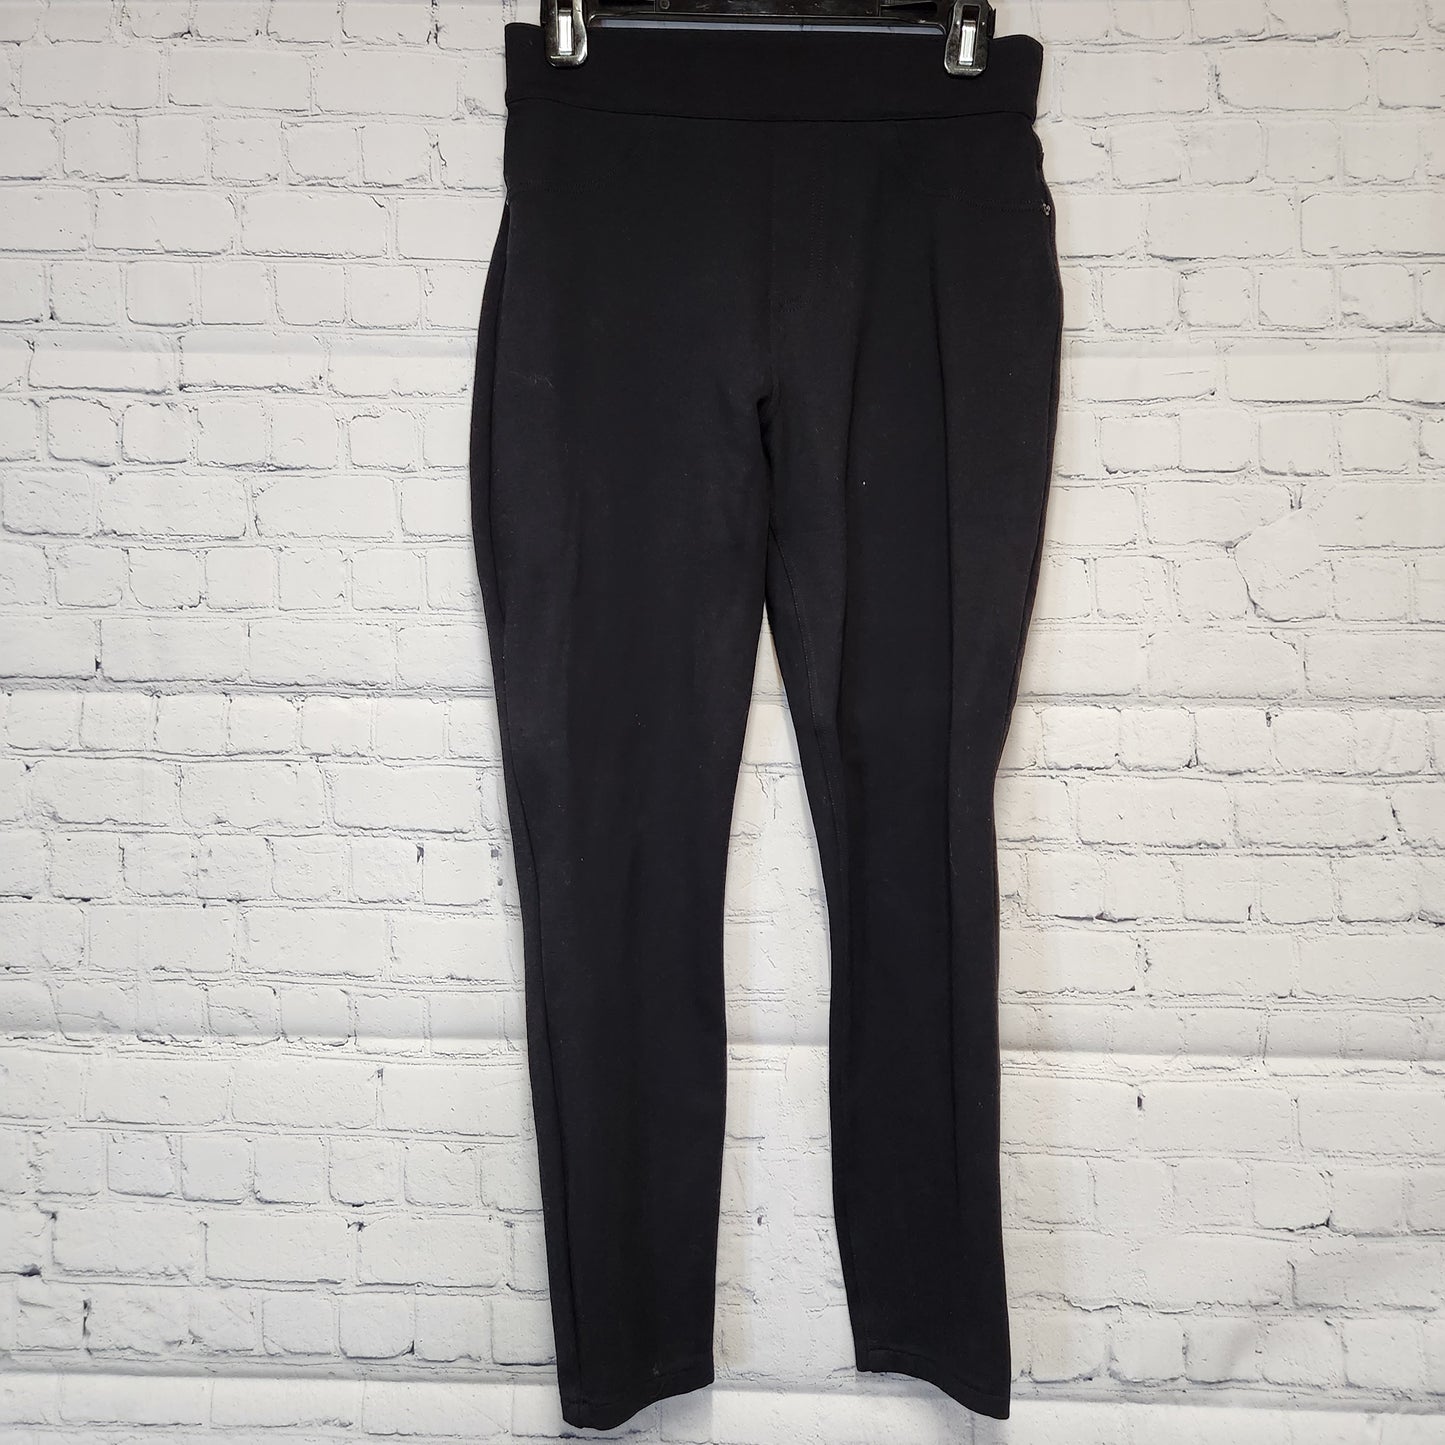 Spanx Women's Pants Black - Medium – PoppinTags